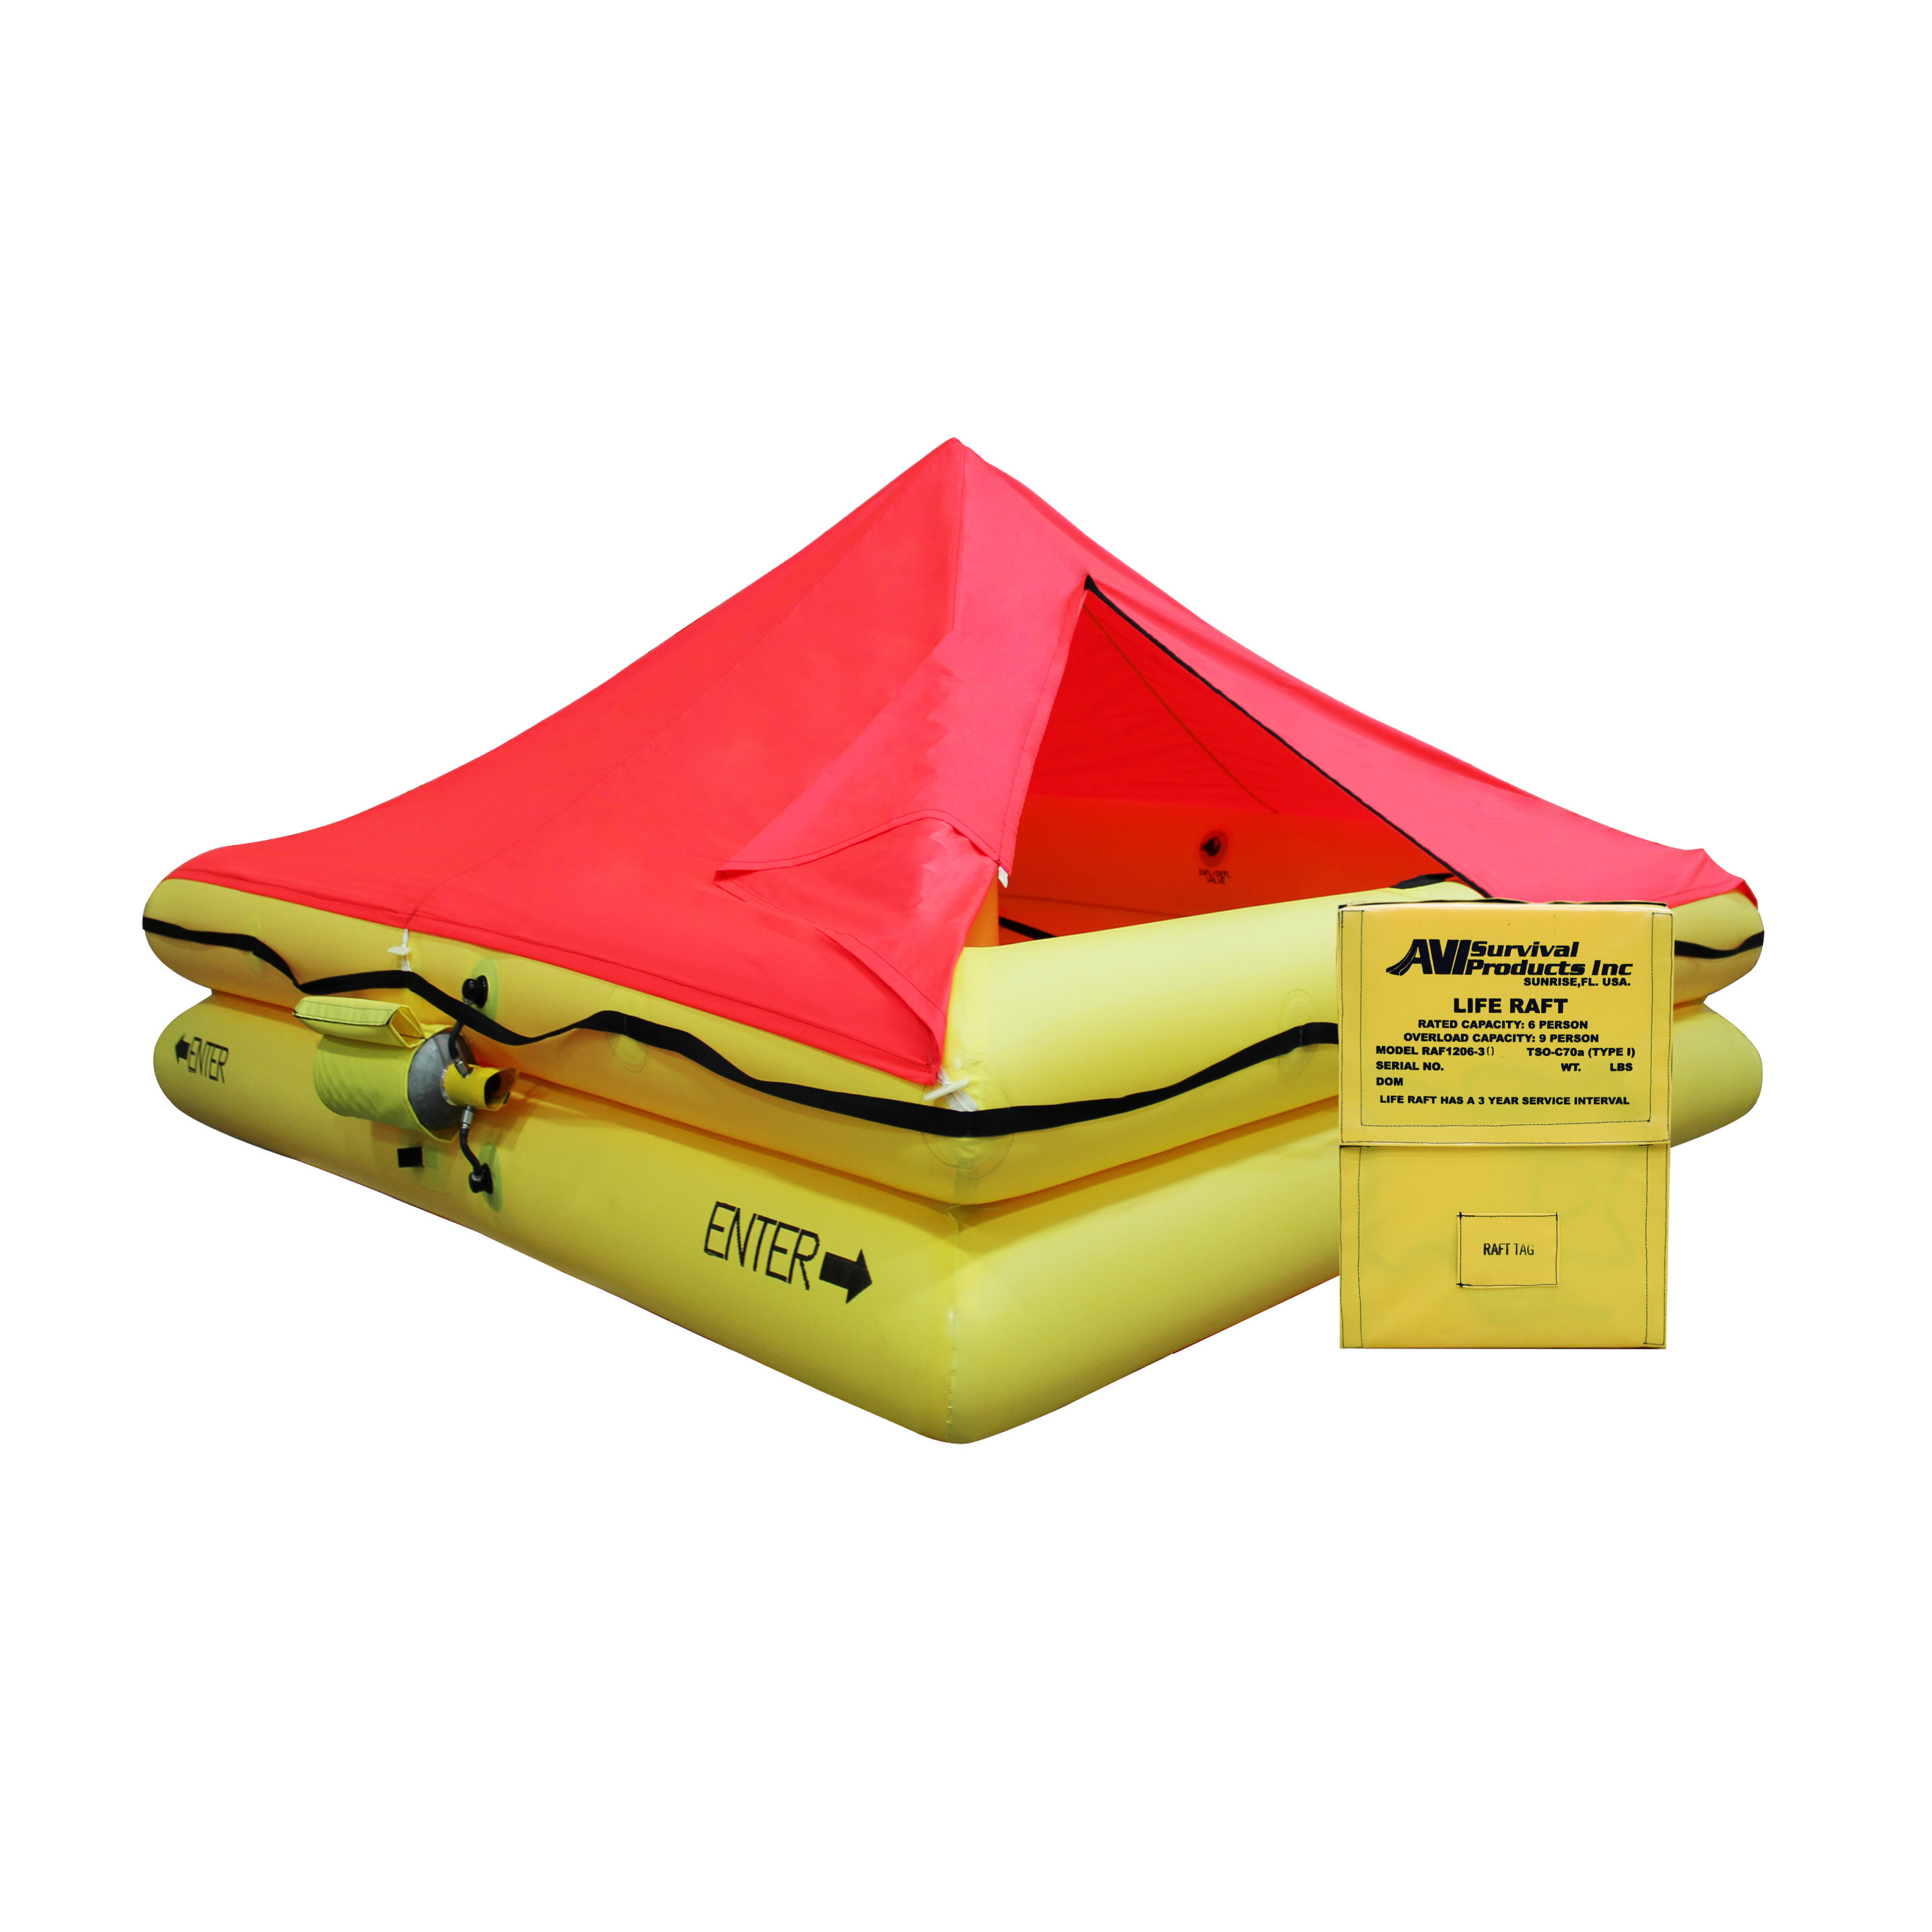 TSO 6 Person Life Raft with FAR 91 Survival Equipment Kit